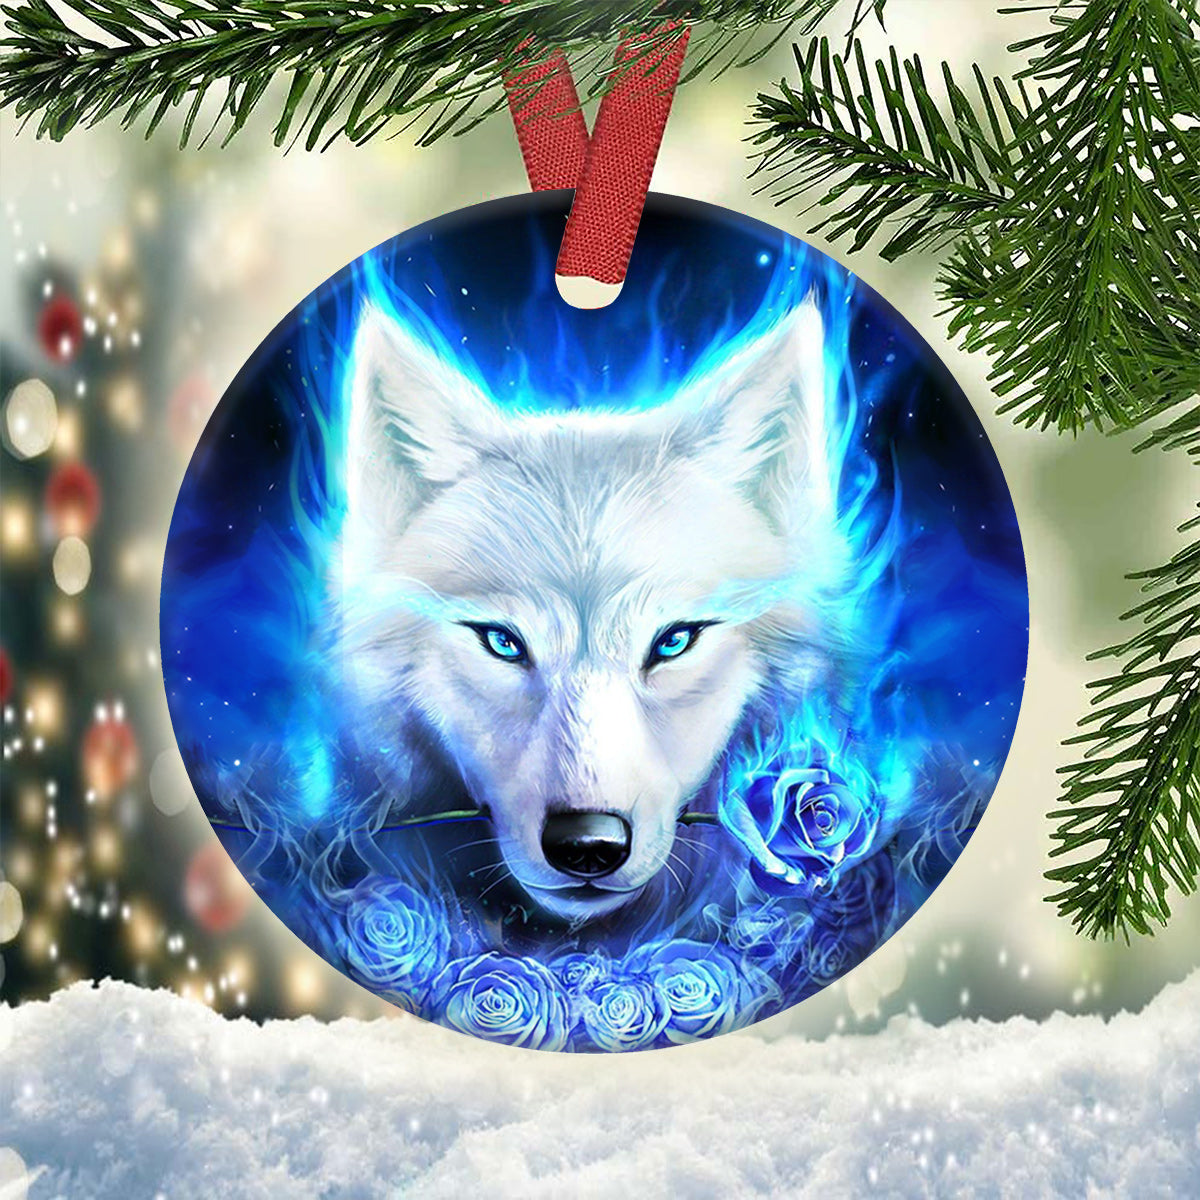 Wolf 2 Ceramic Circle Ornament - Decorative Ornament - Christmas Ornament